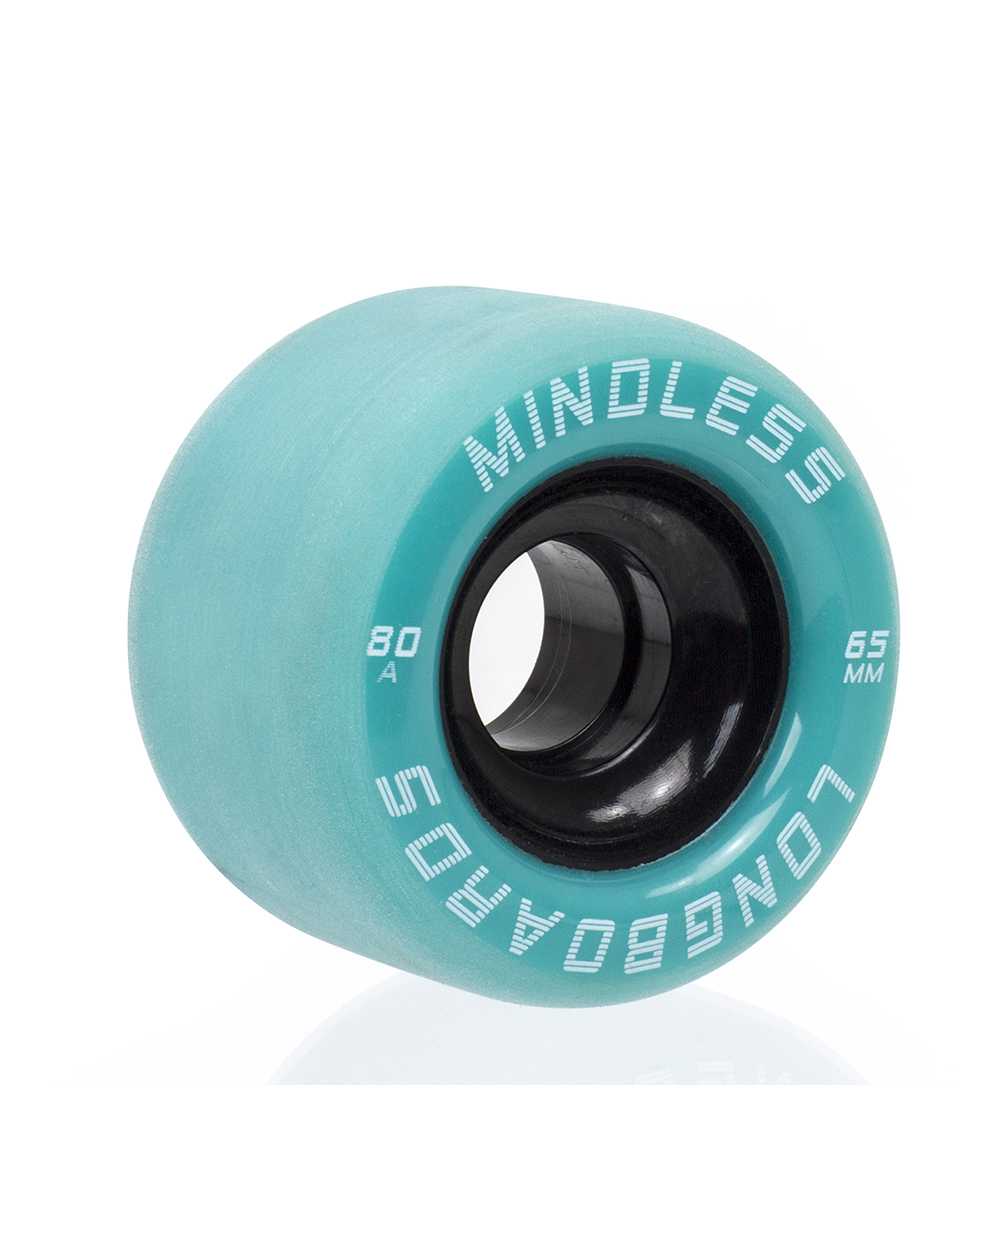 Mindless Viper 65mm 82A Skateboard Wheels Green pack of 4